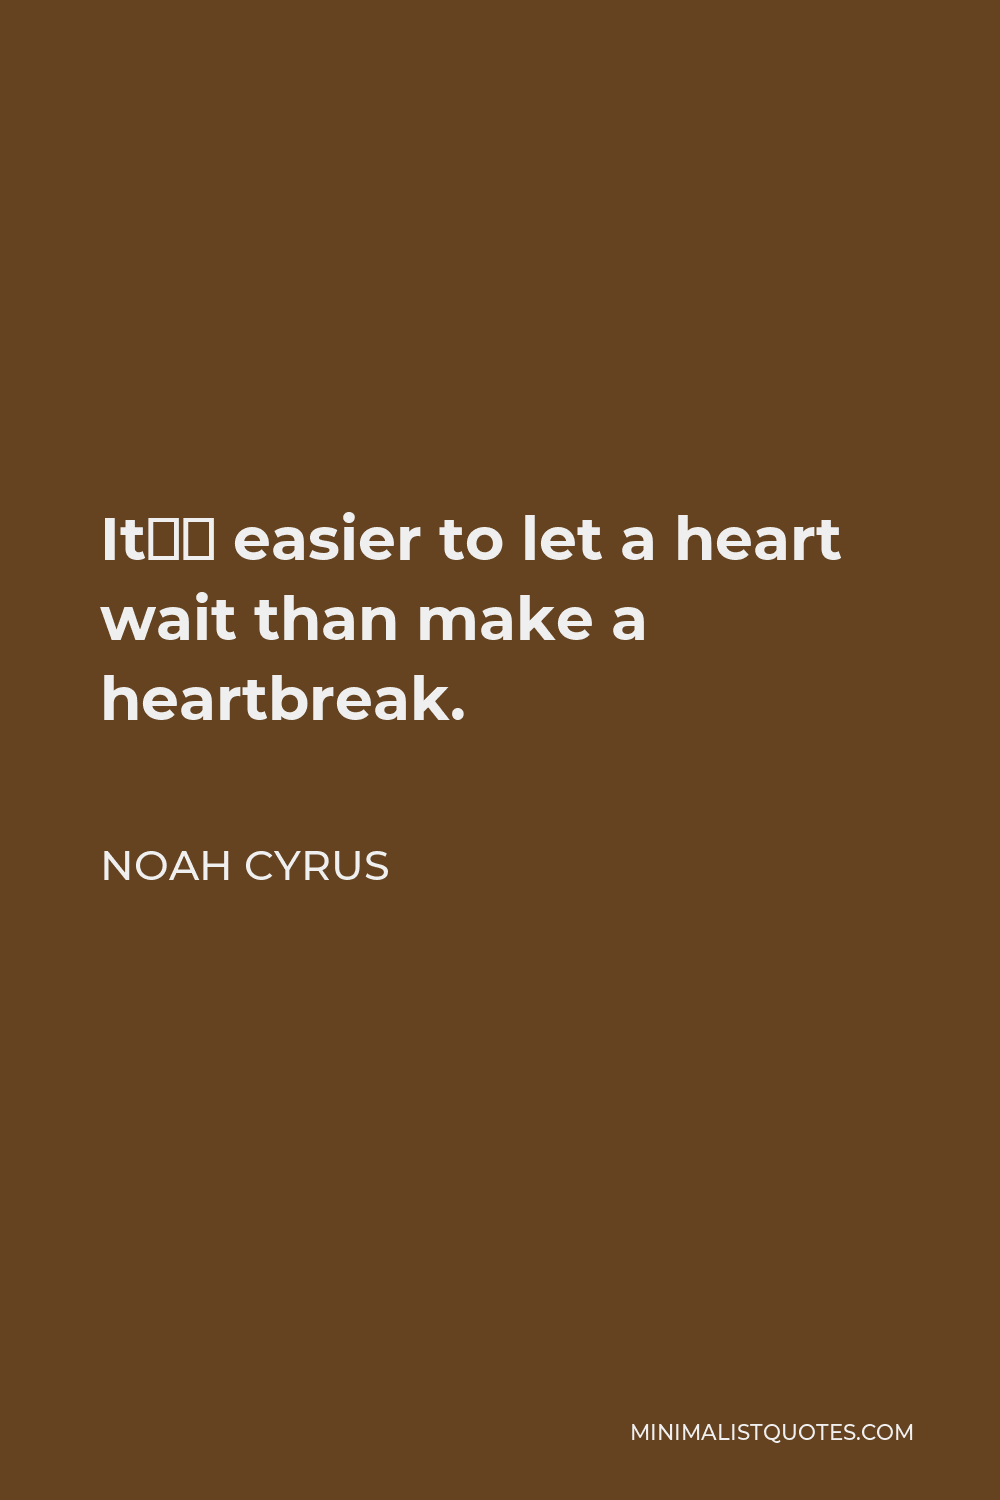 Noah Cyrus Quote - It’s easier to let a heart wait than make a heartbreak.